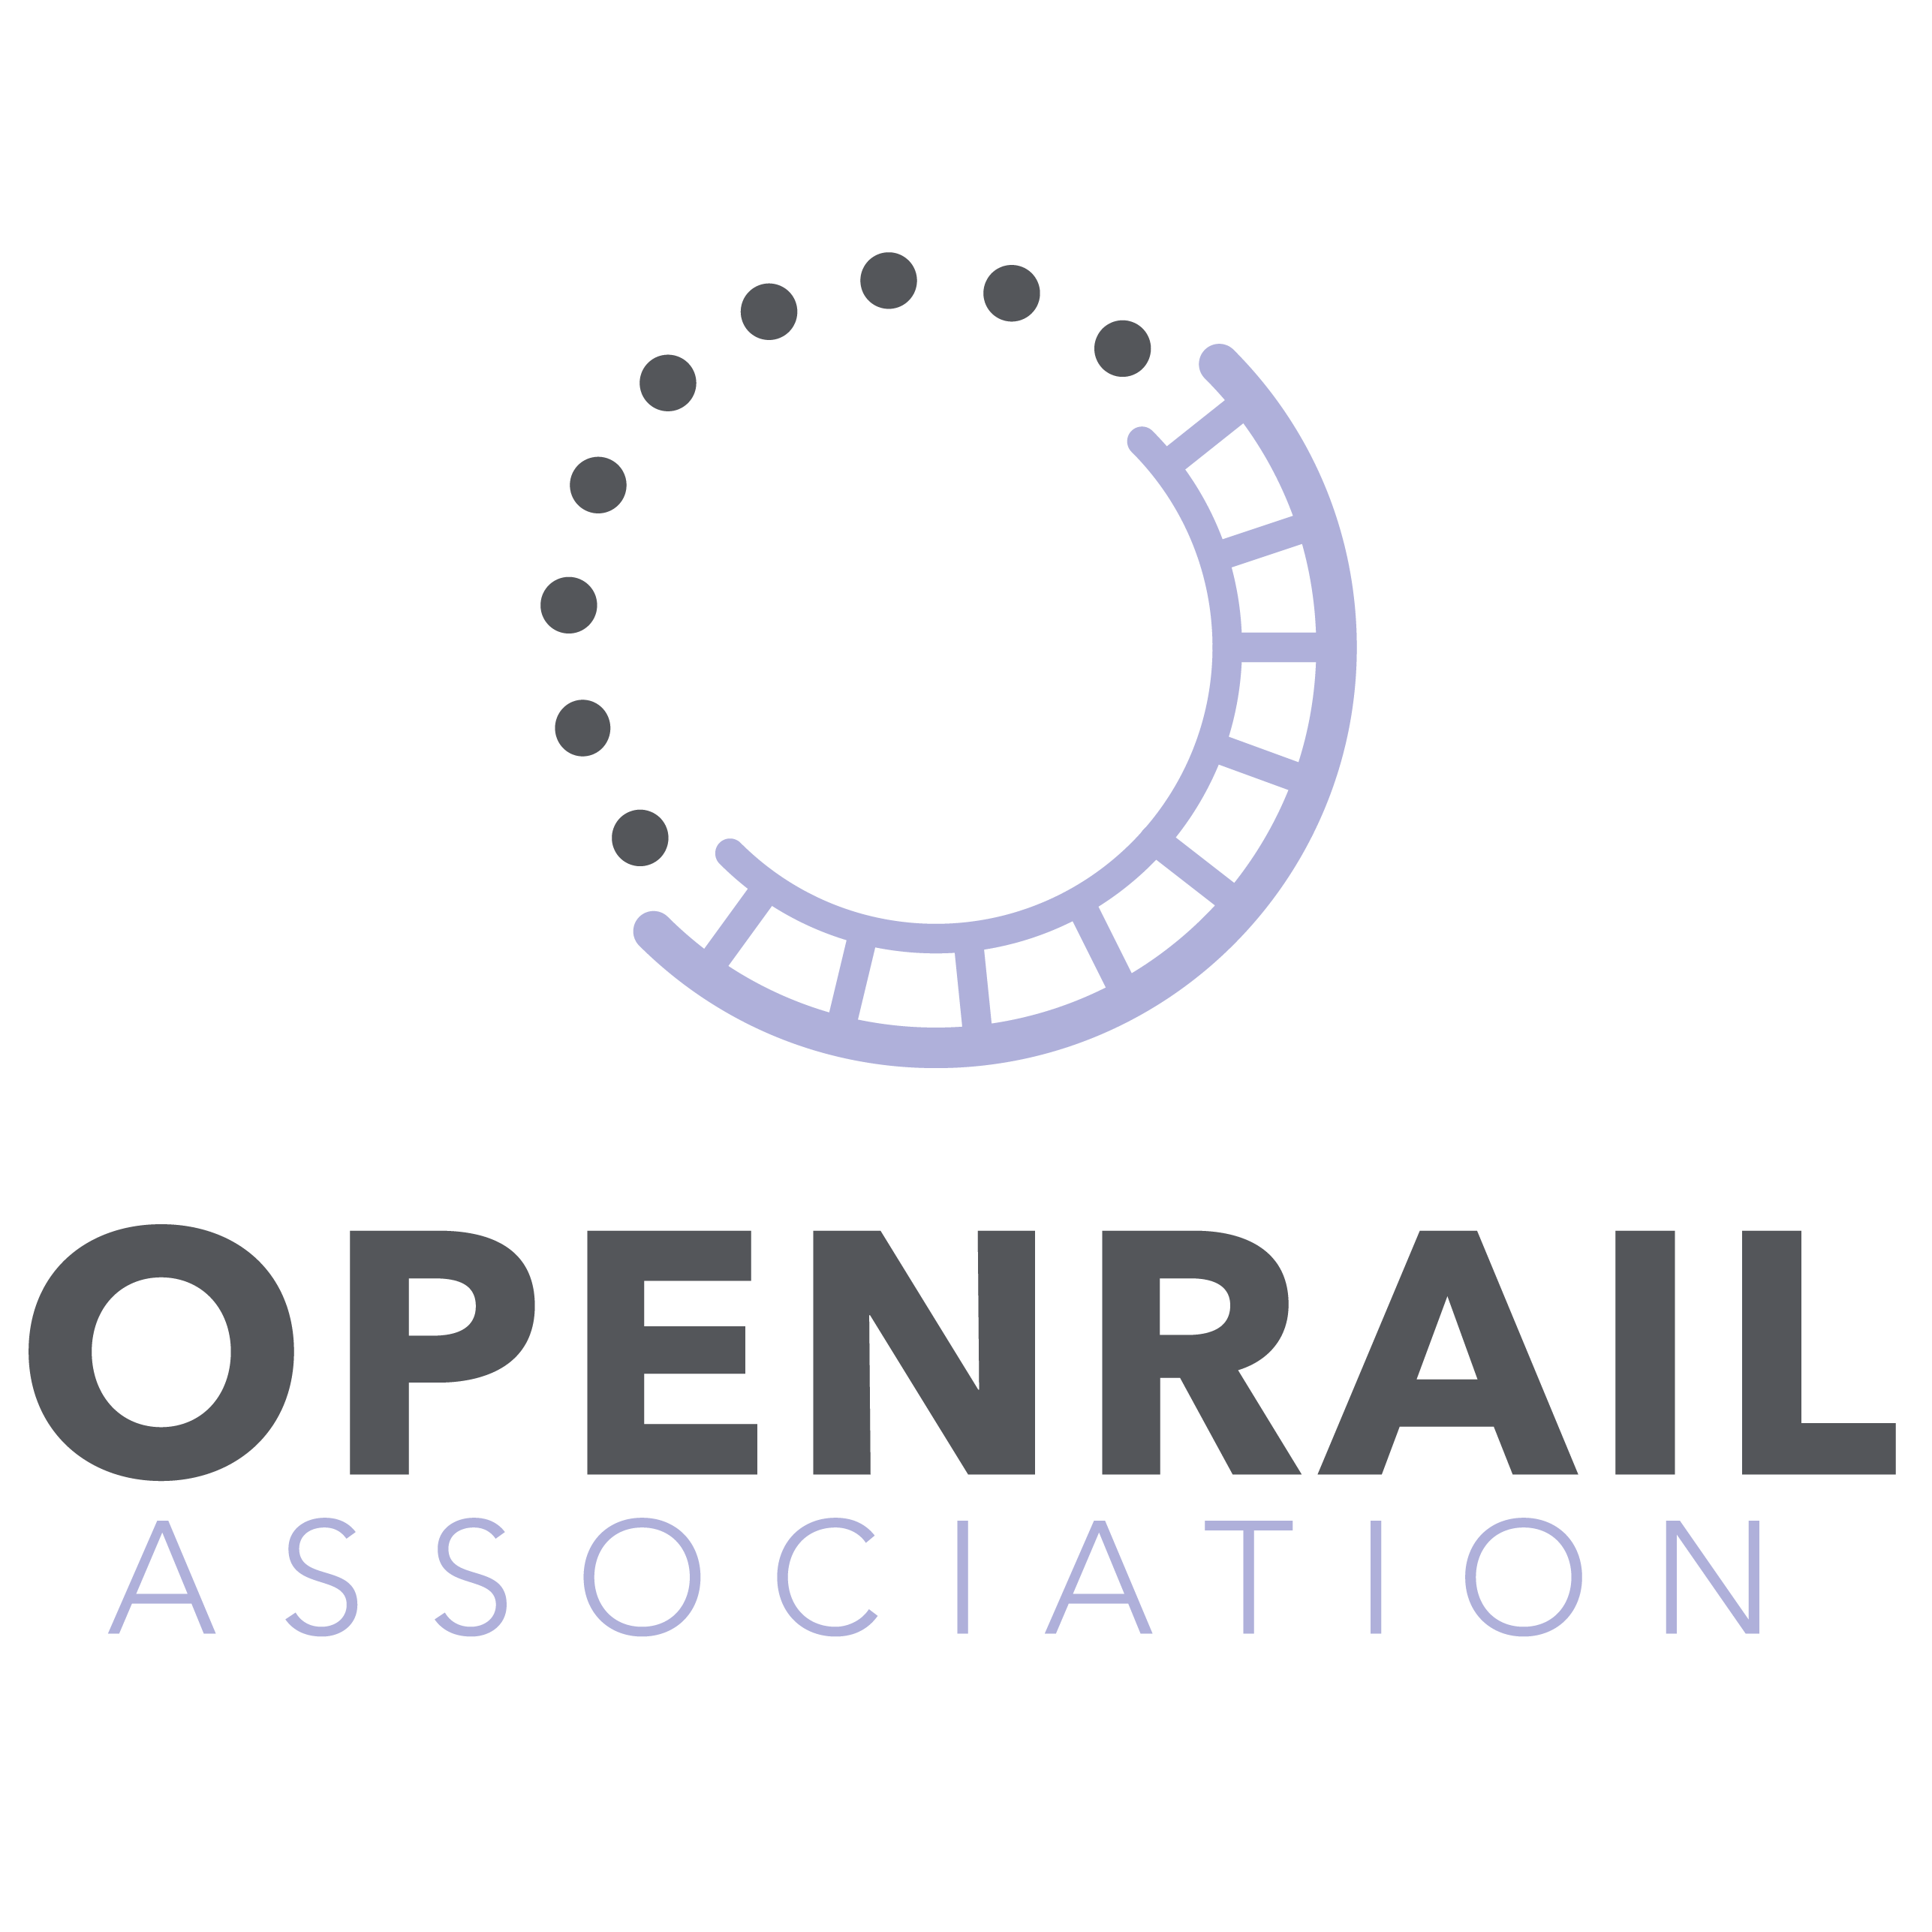 OpenRail Association logo